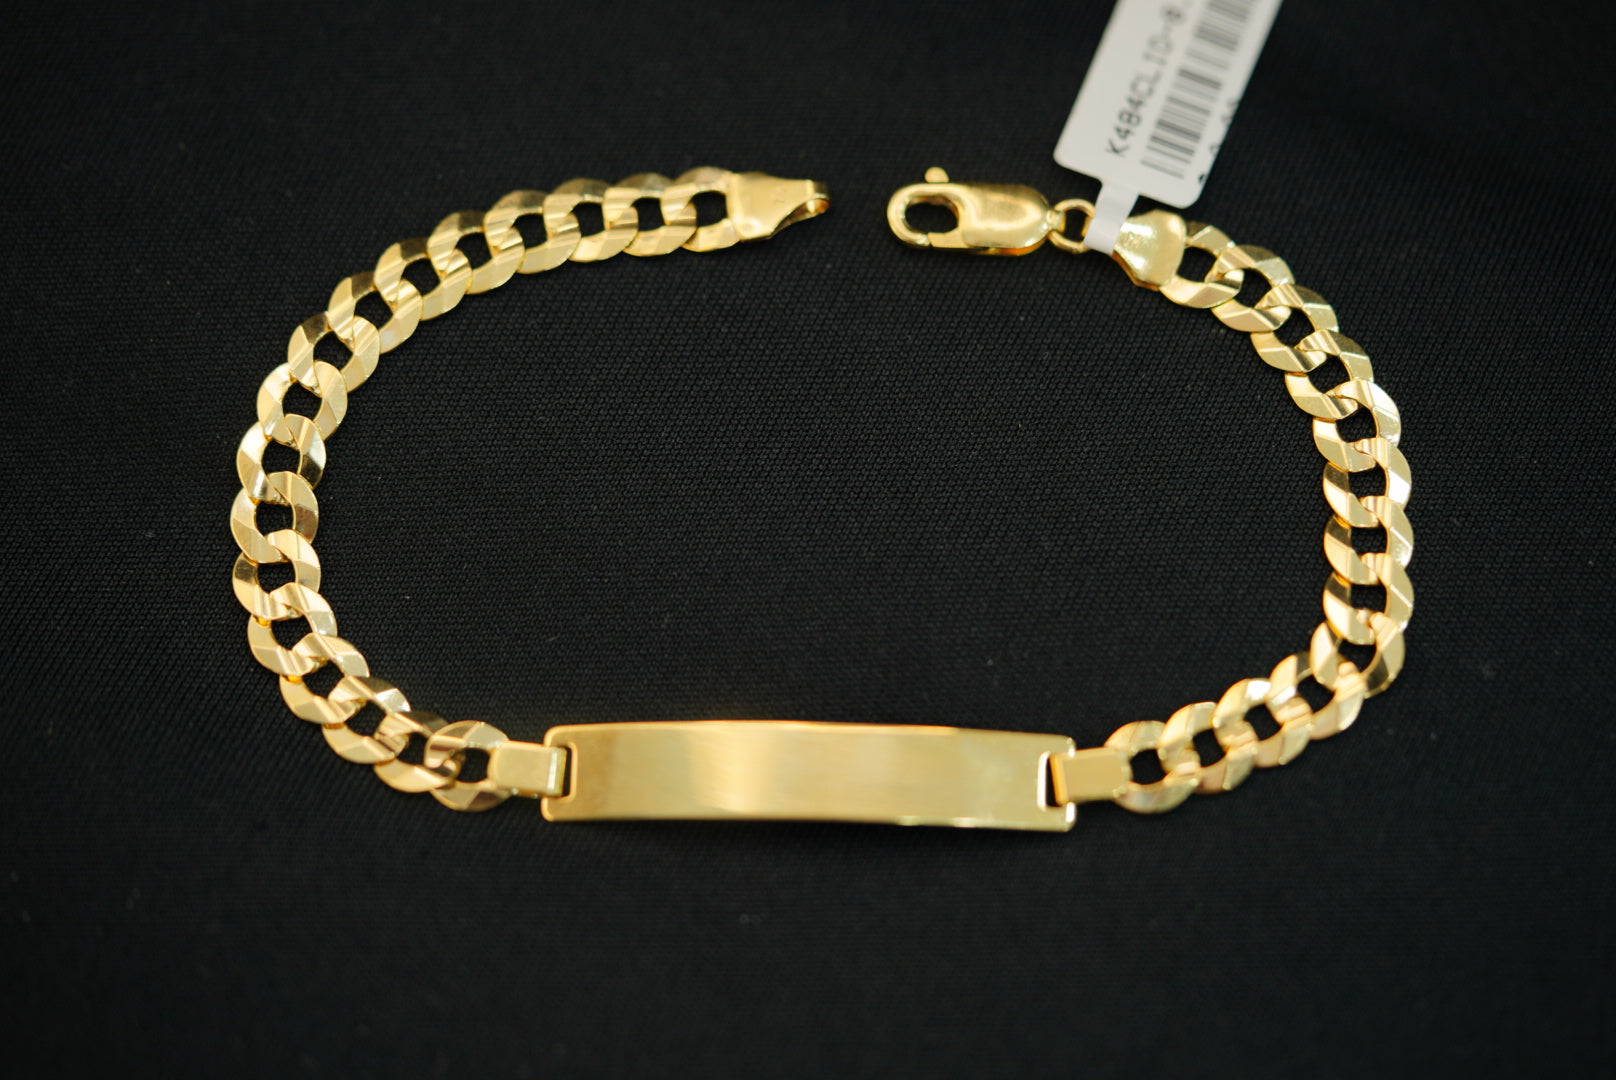 10KT Gold Plate with Diamond Cut Bracelet